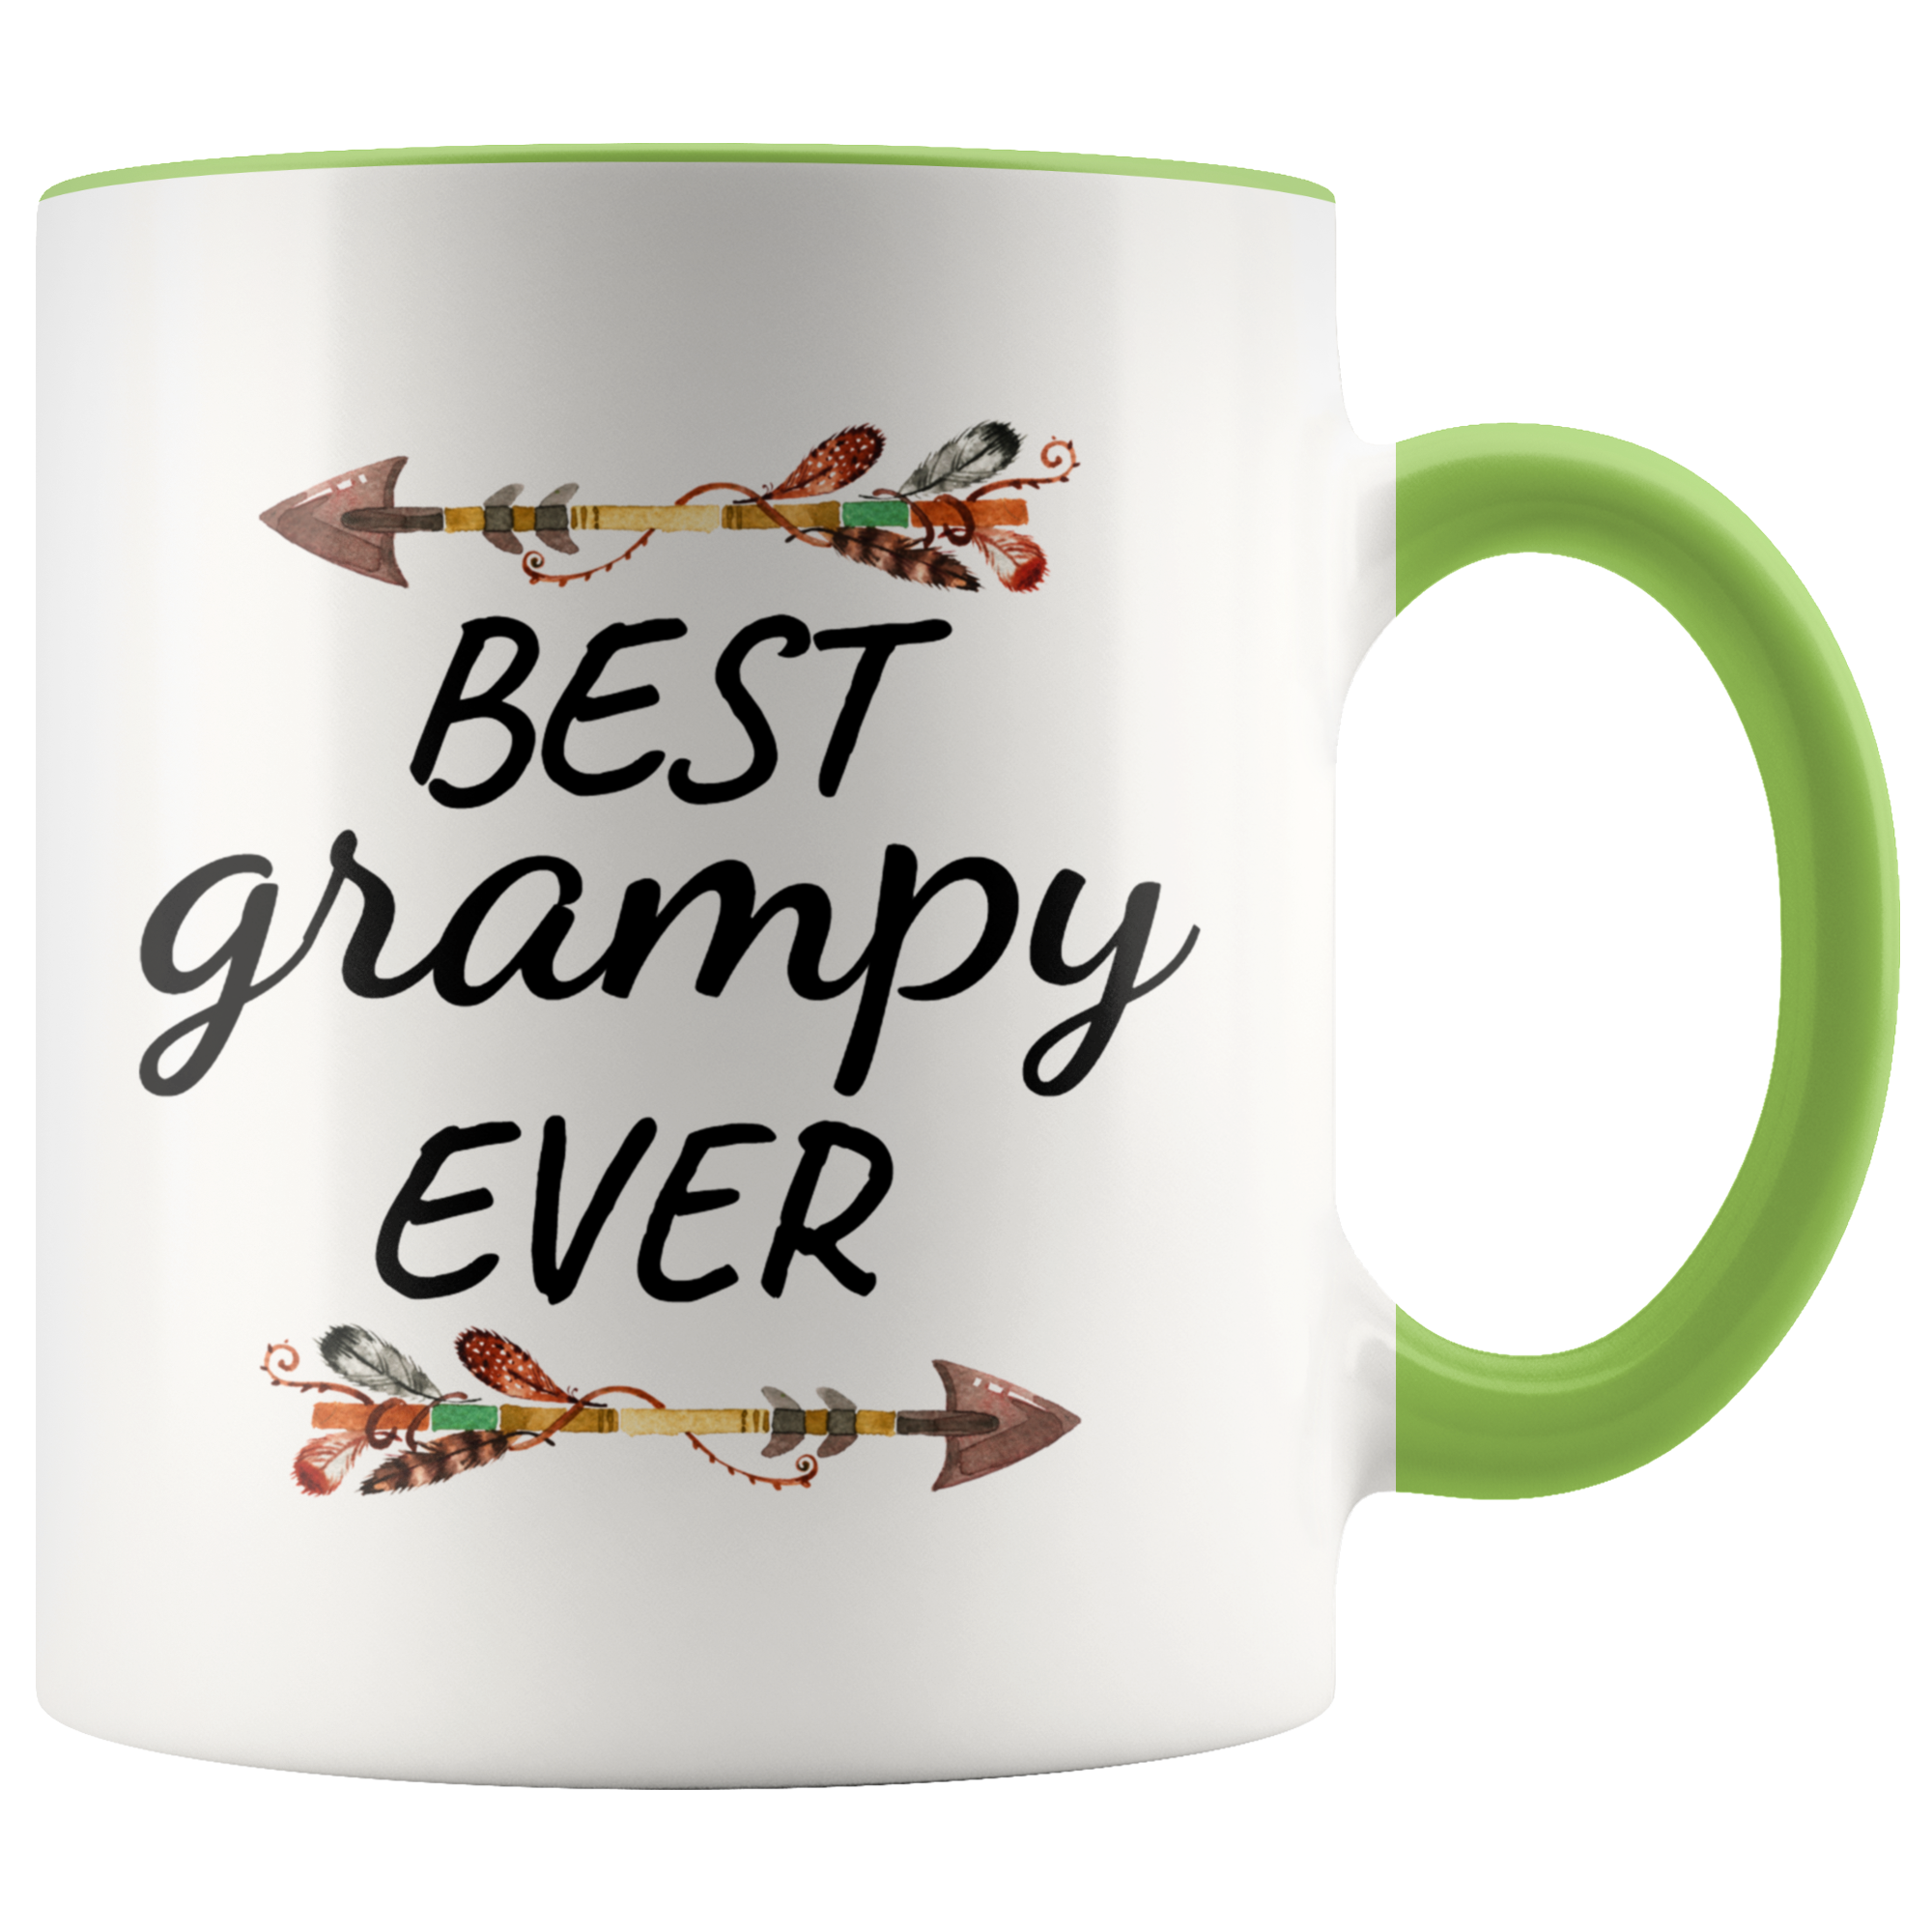 Best Grampy Mug